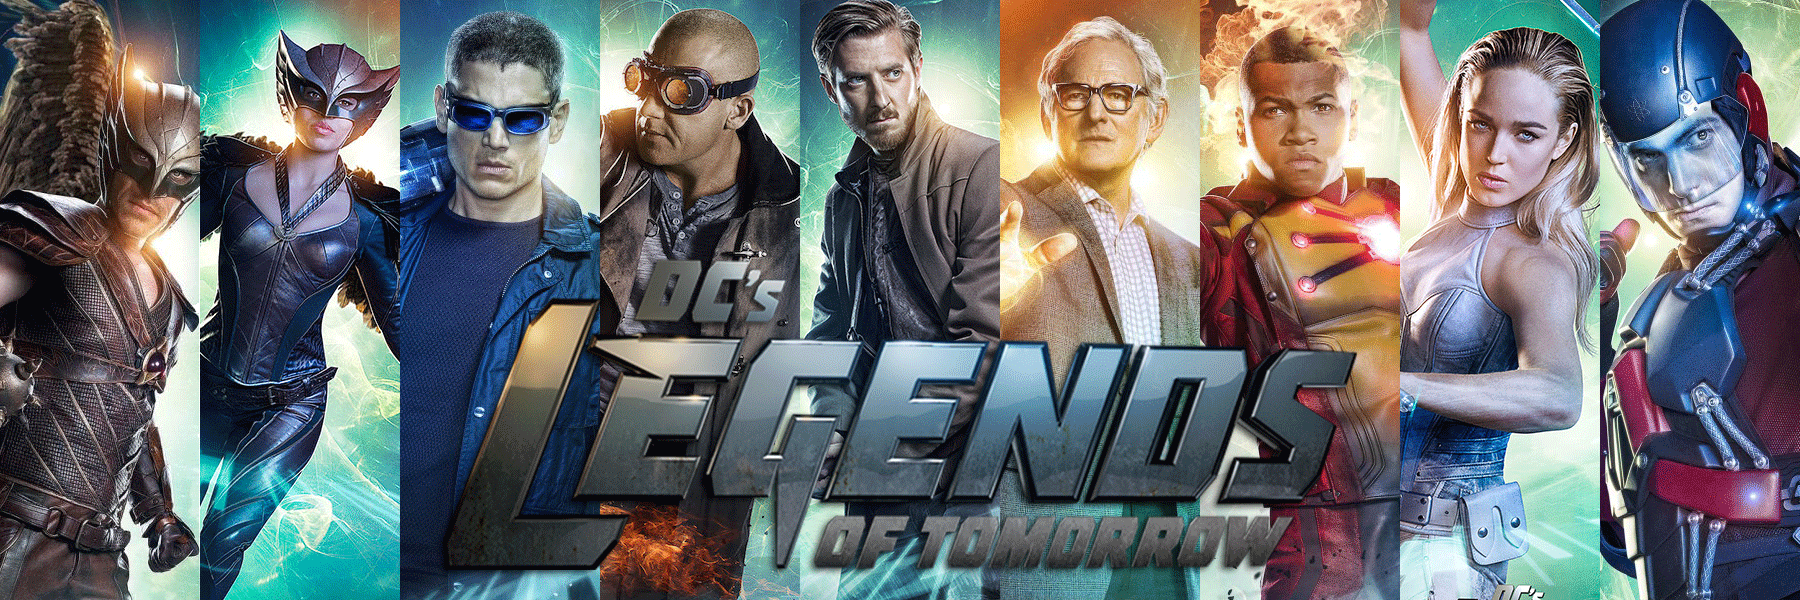 DC's Legends Of Tomorrow Art